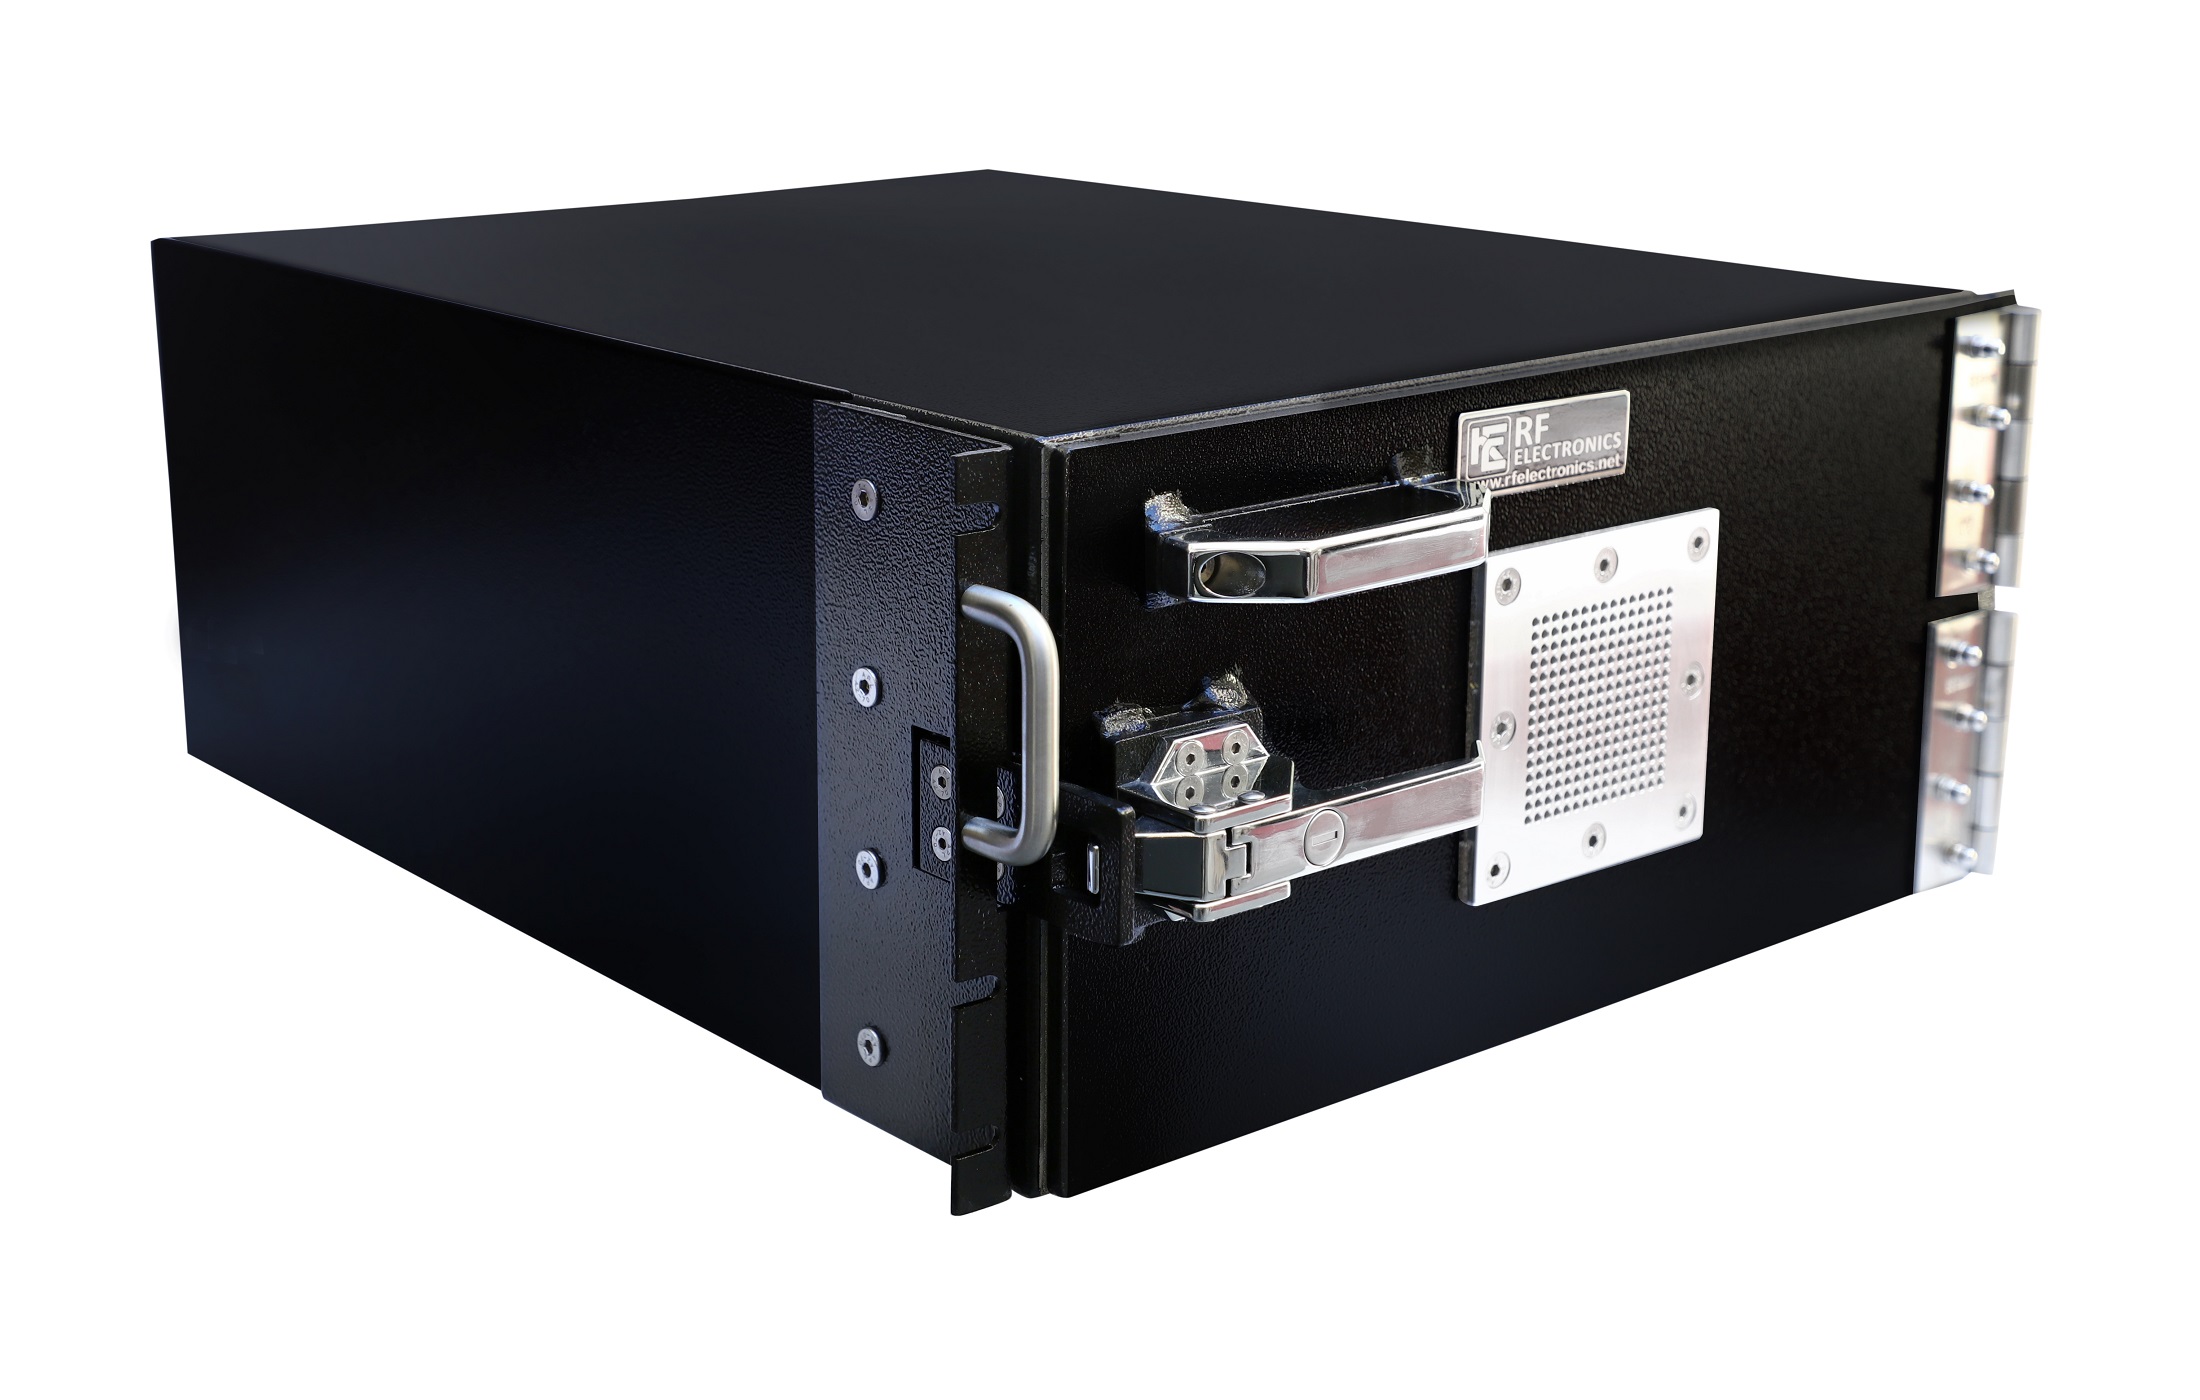 HDRF-8760-K RF Shield Test Box